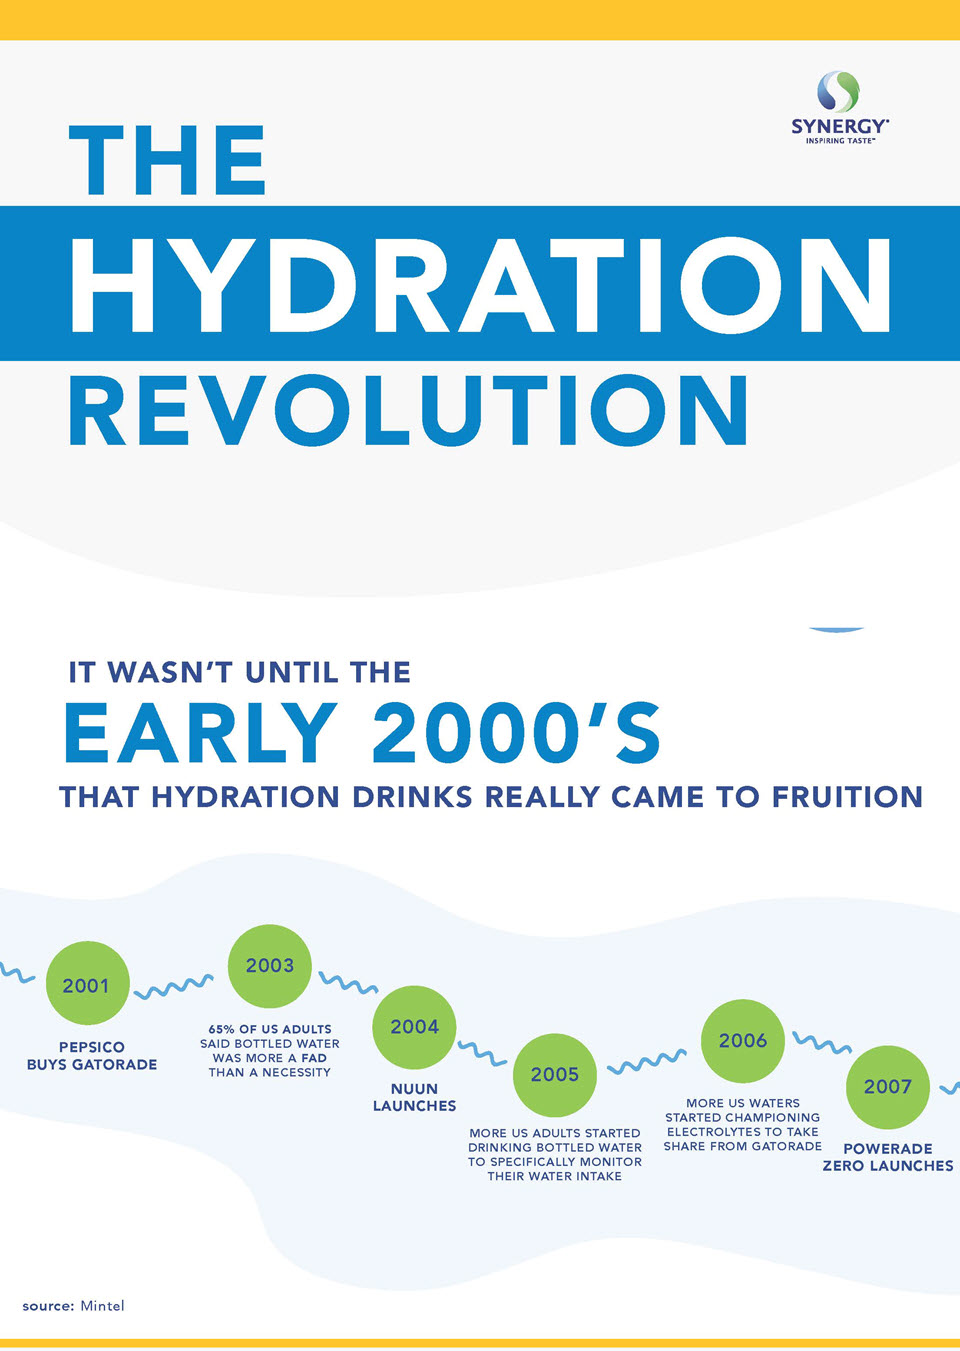 Synergy Hydration Revolution